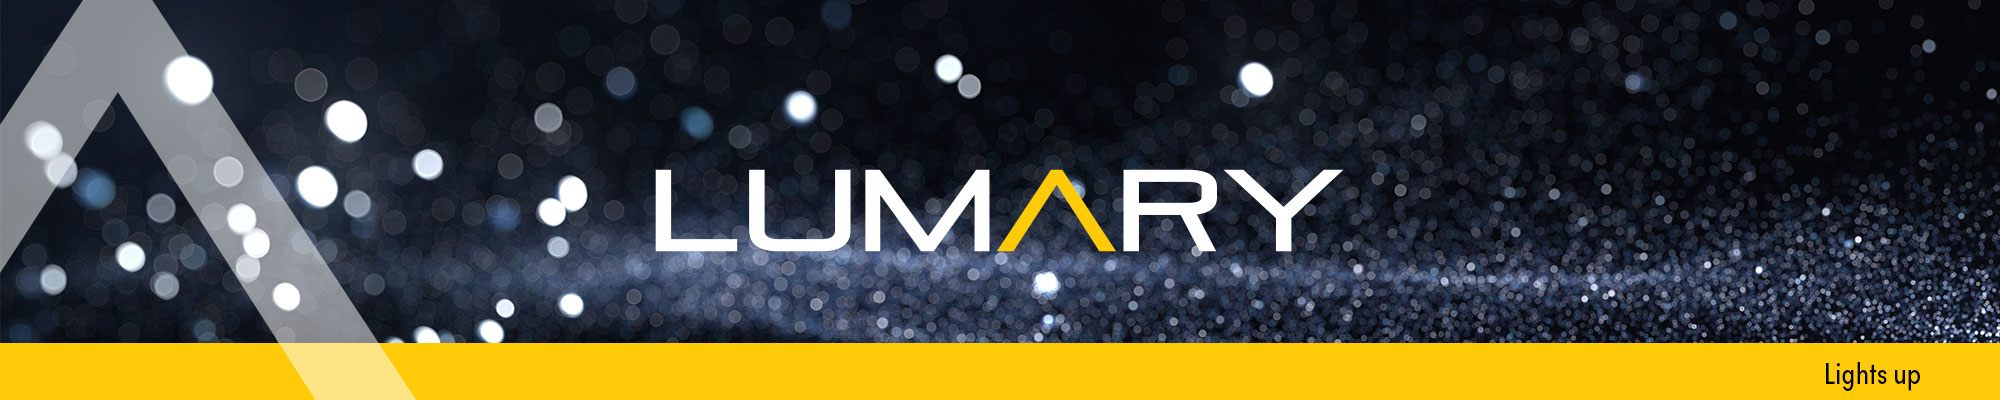 Lumary brand banner